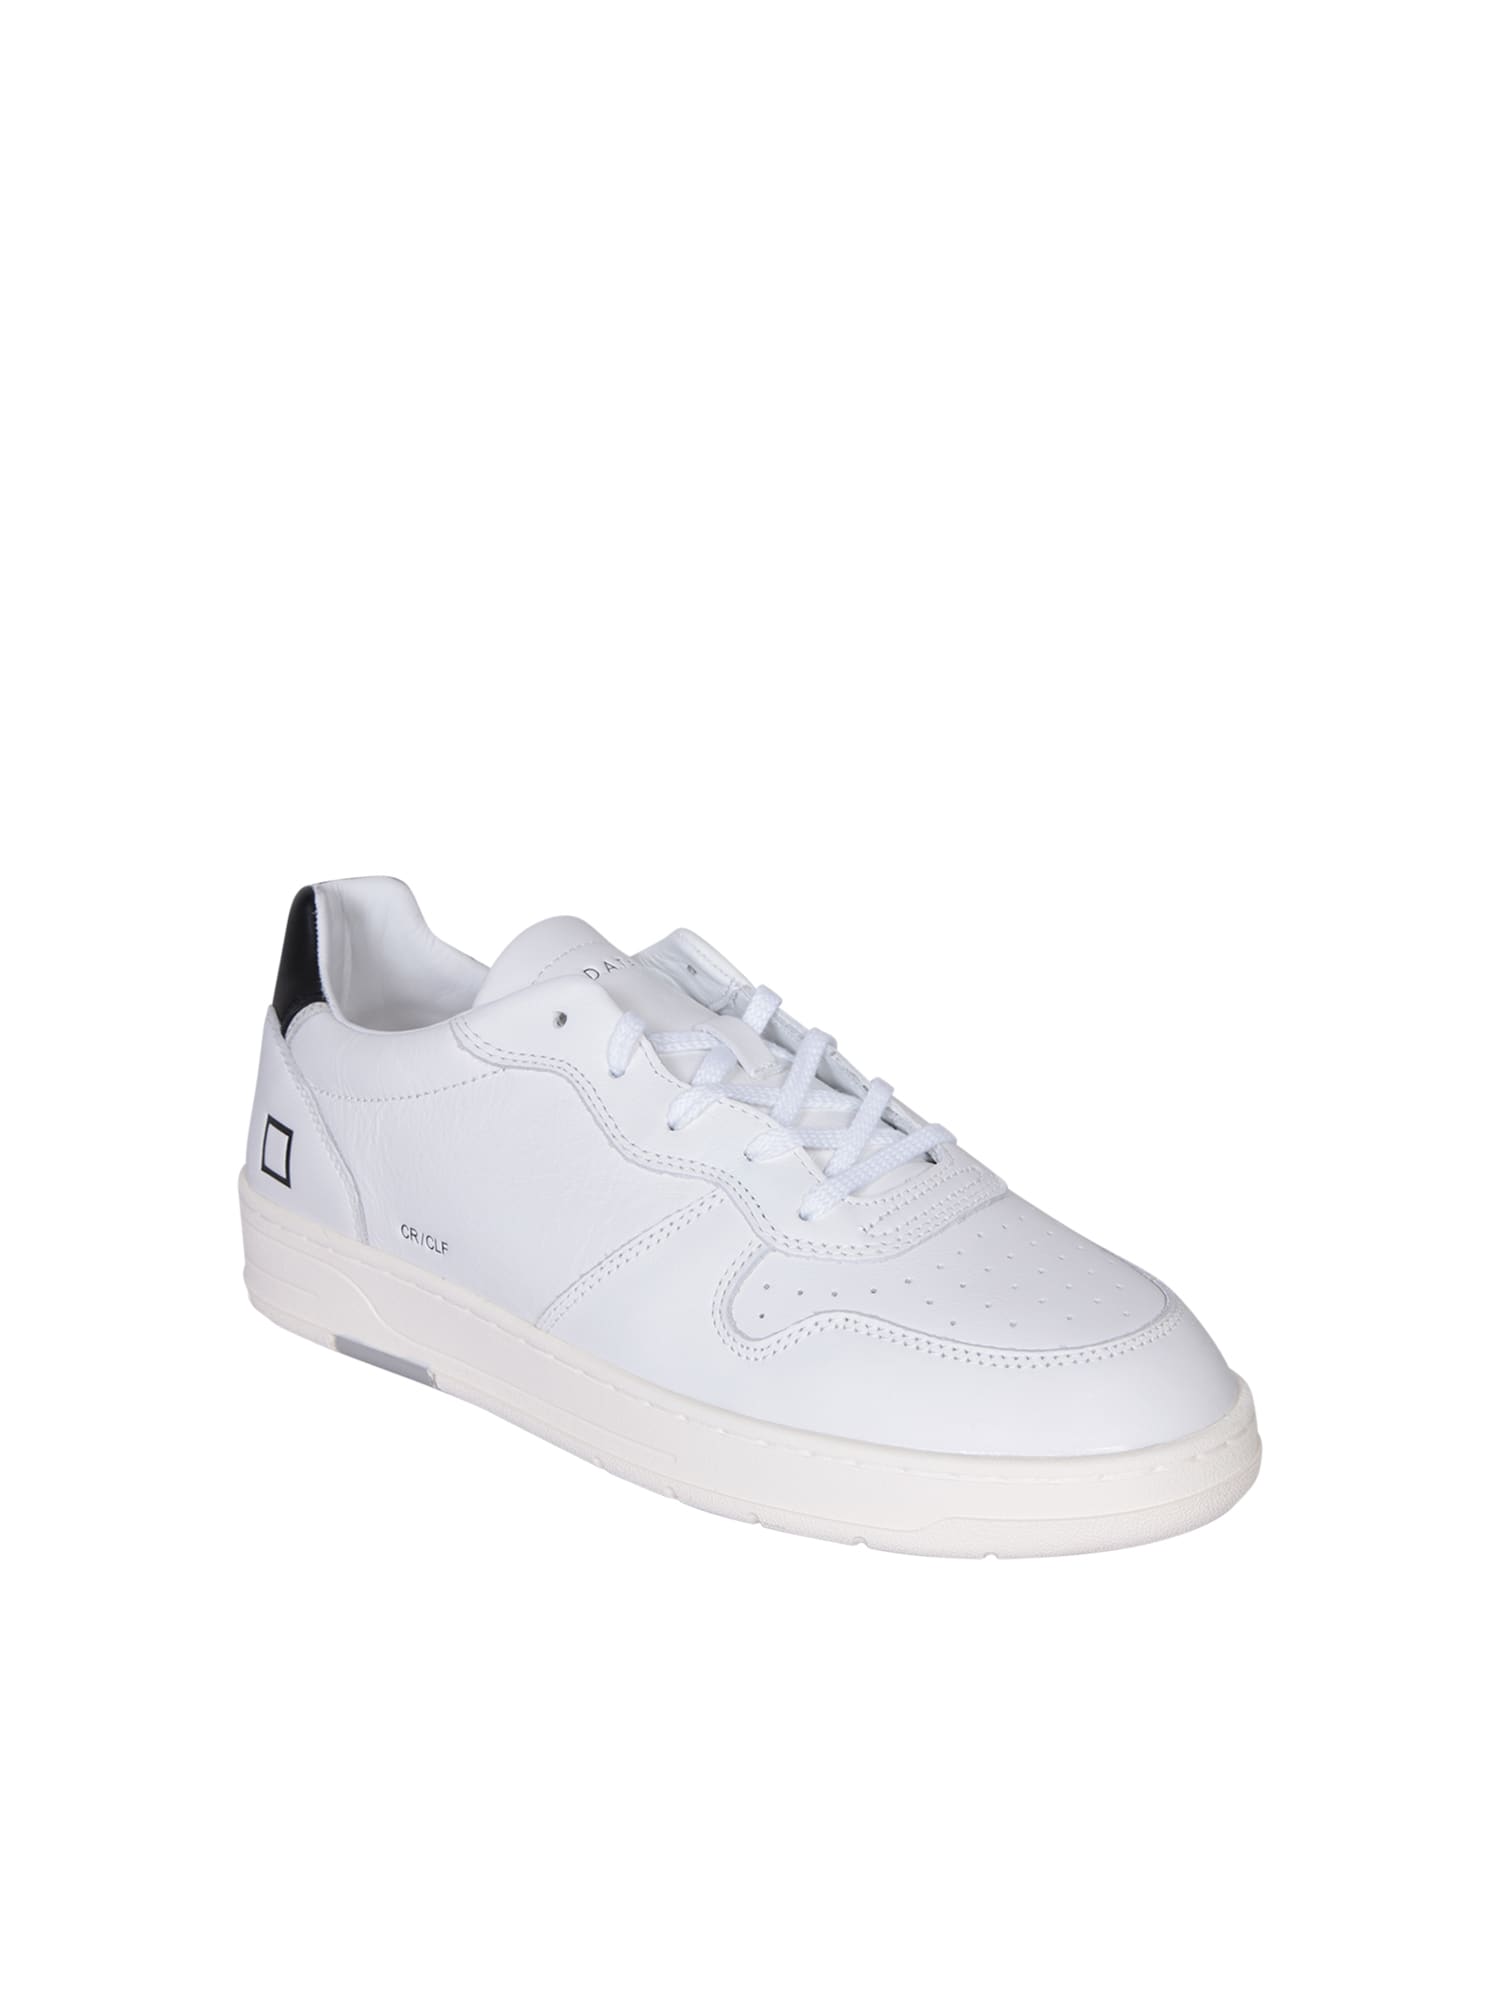 Shop Date D.a.t.e. Court Calf Sneakers Black/white